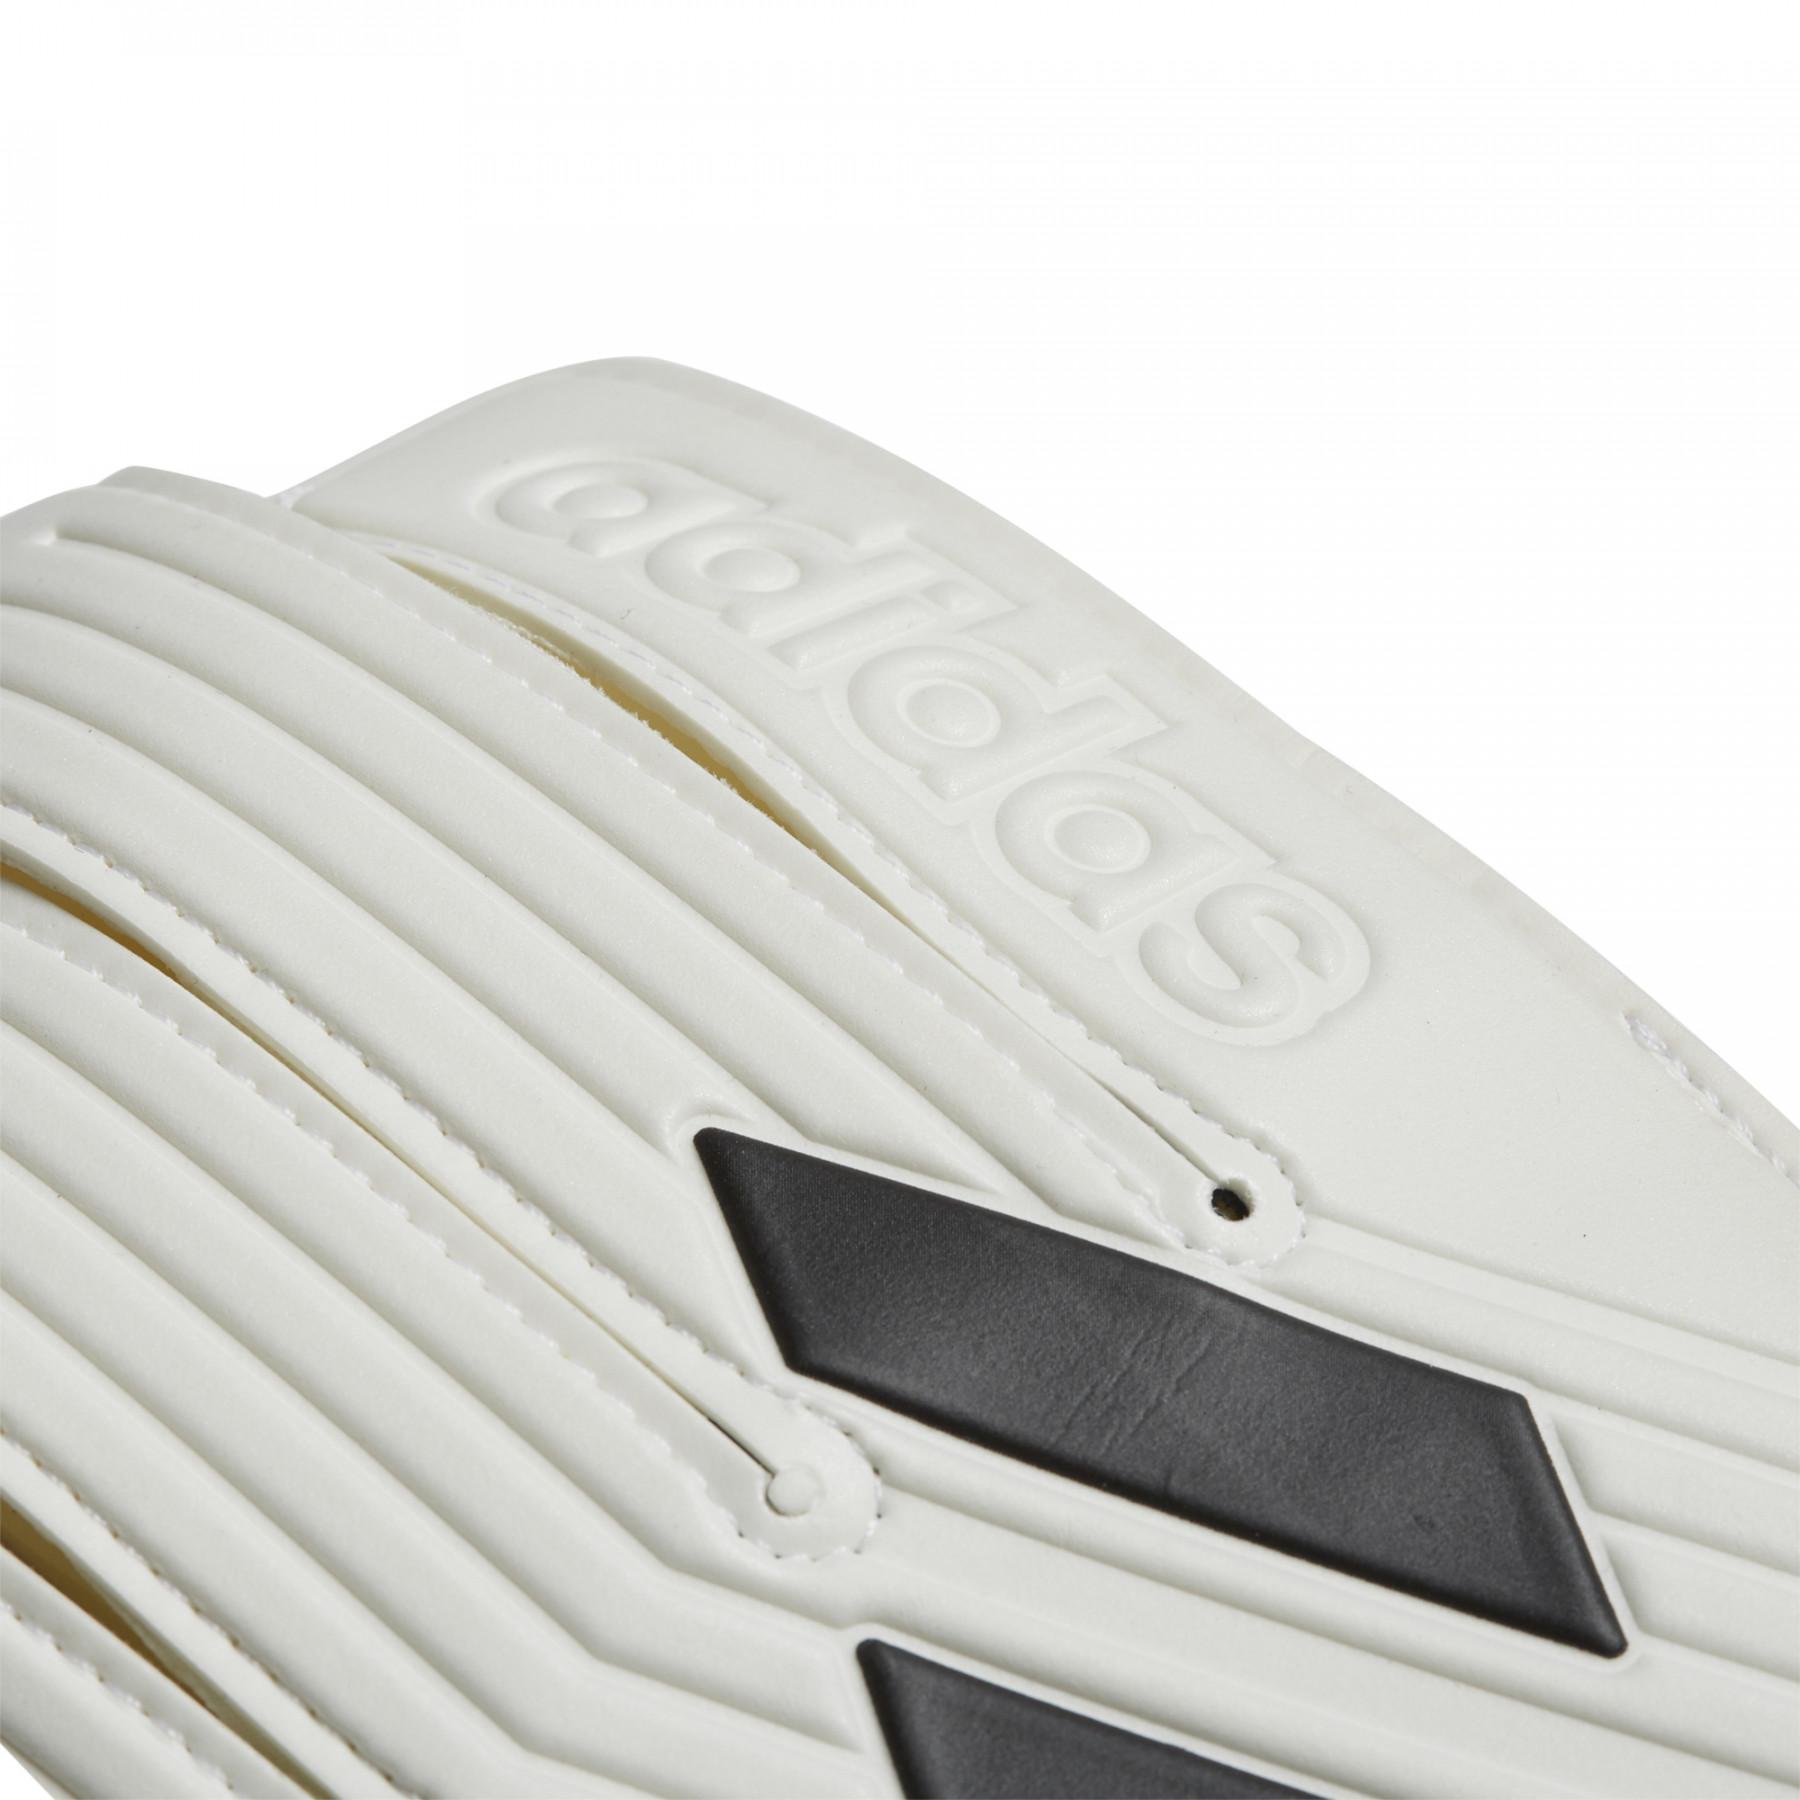 Goalkeeper gloves adidas Tiro Club